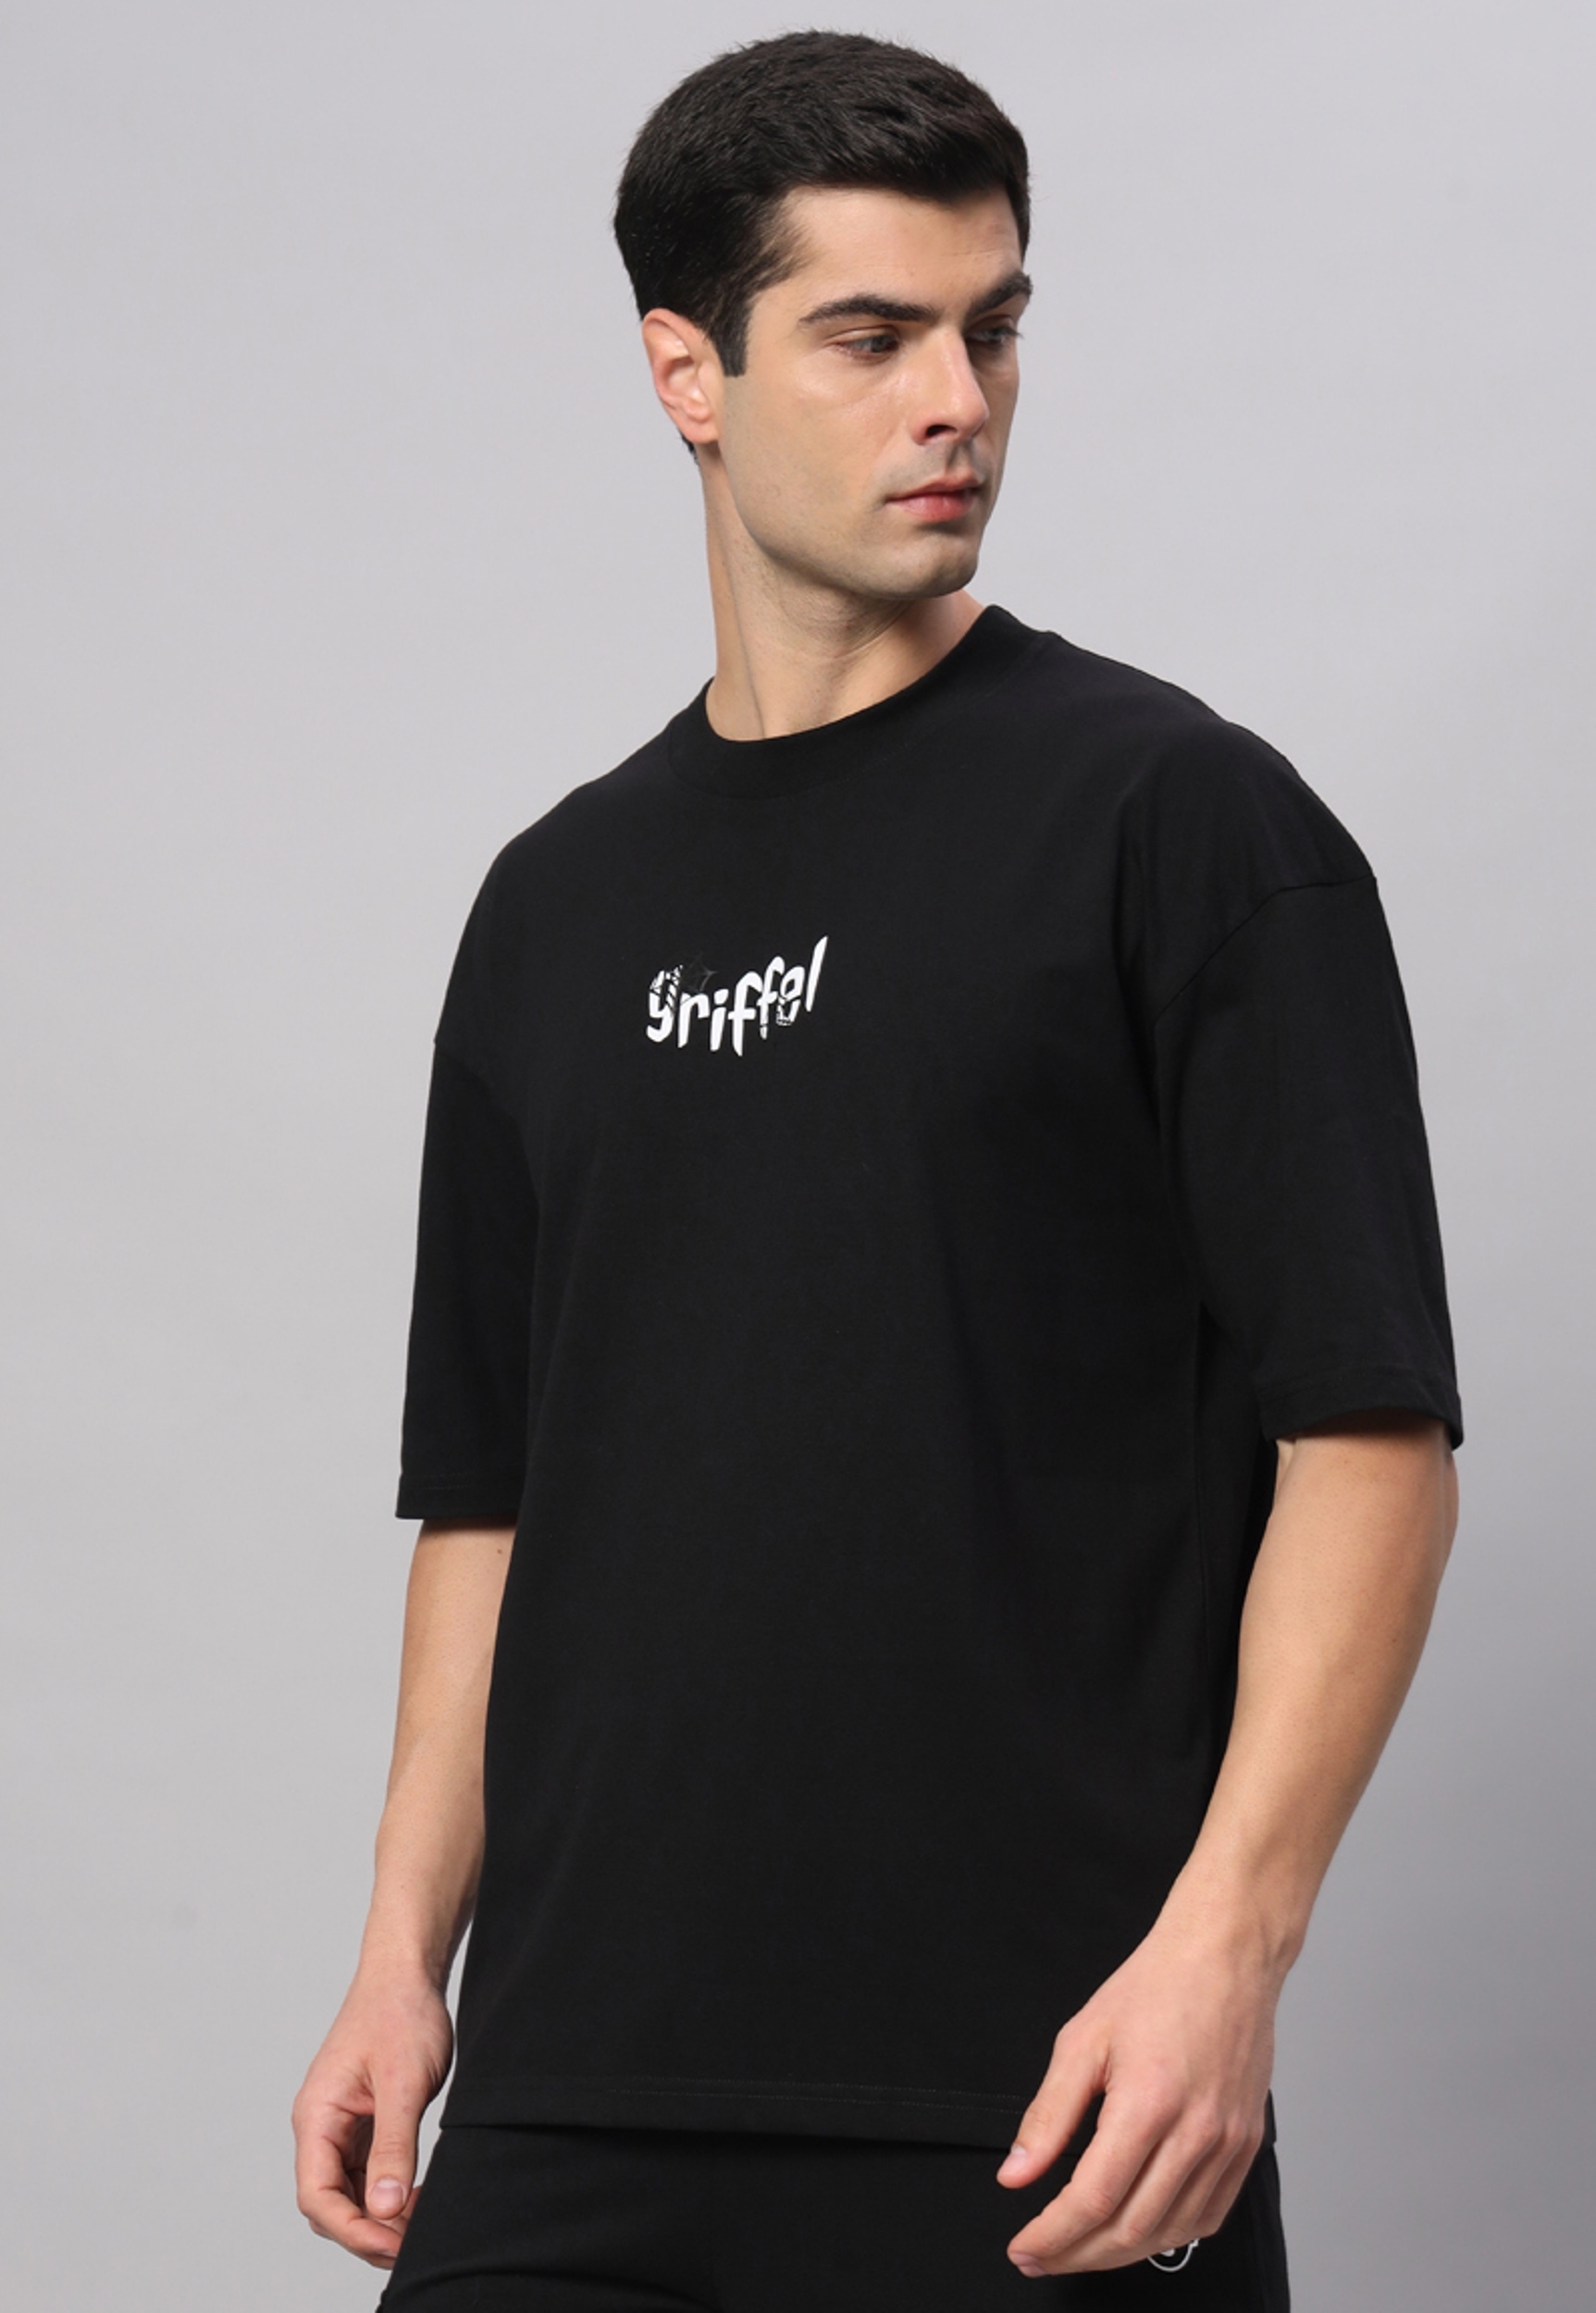 Men's Black Cotton Loose Printed   Boxy T-Shirt s